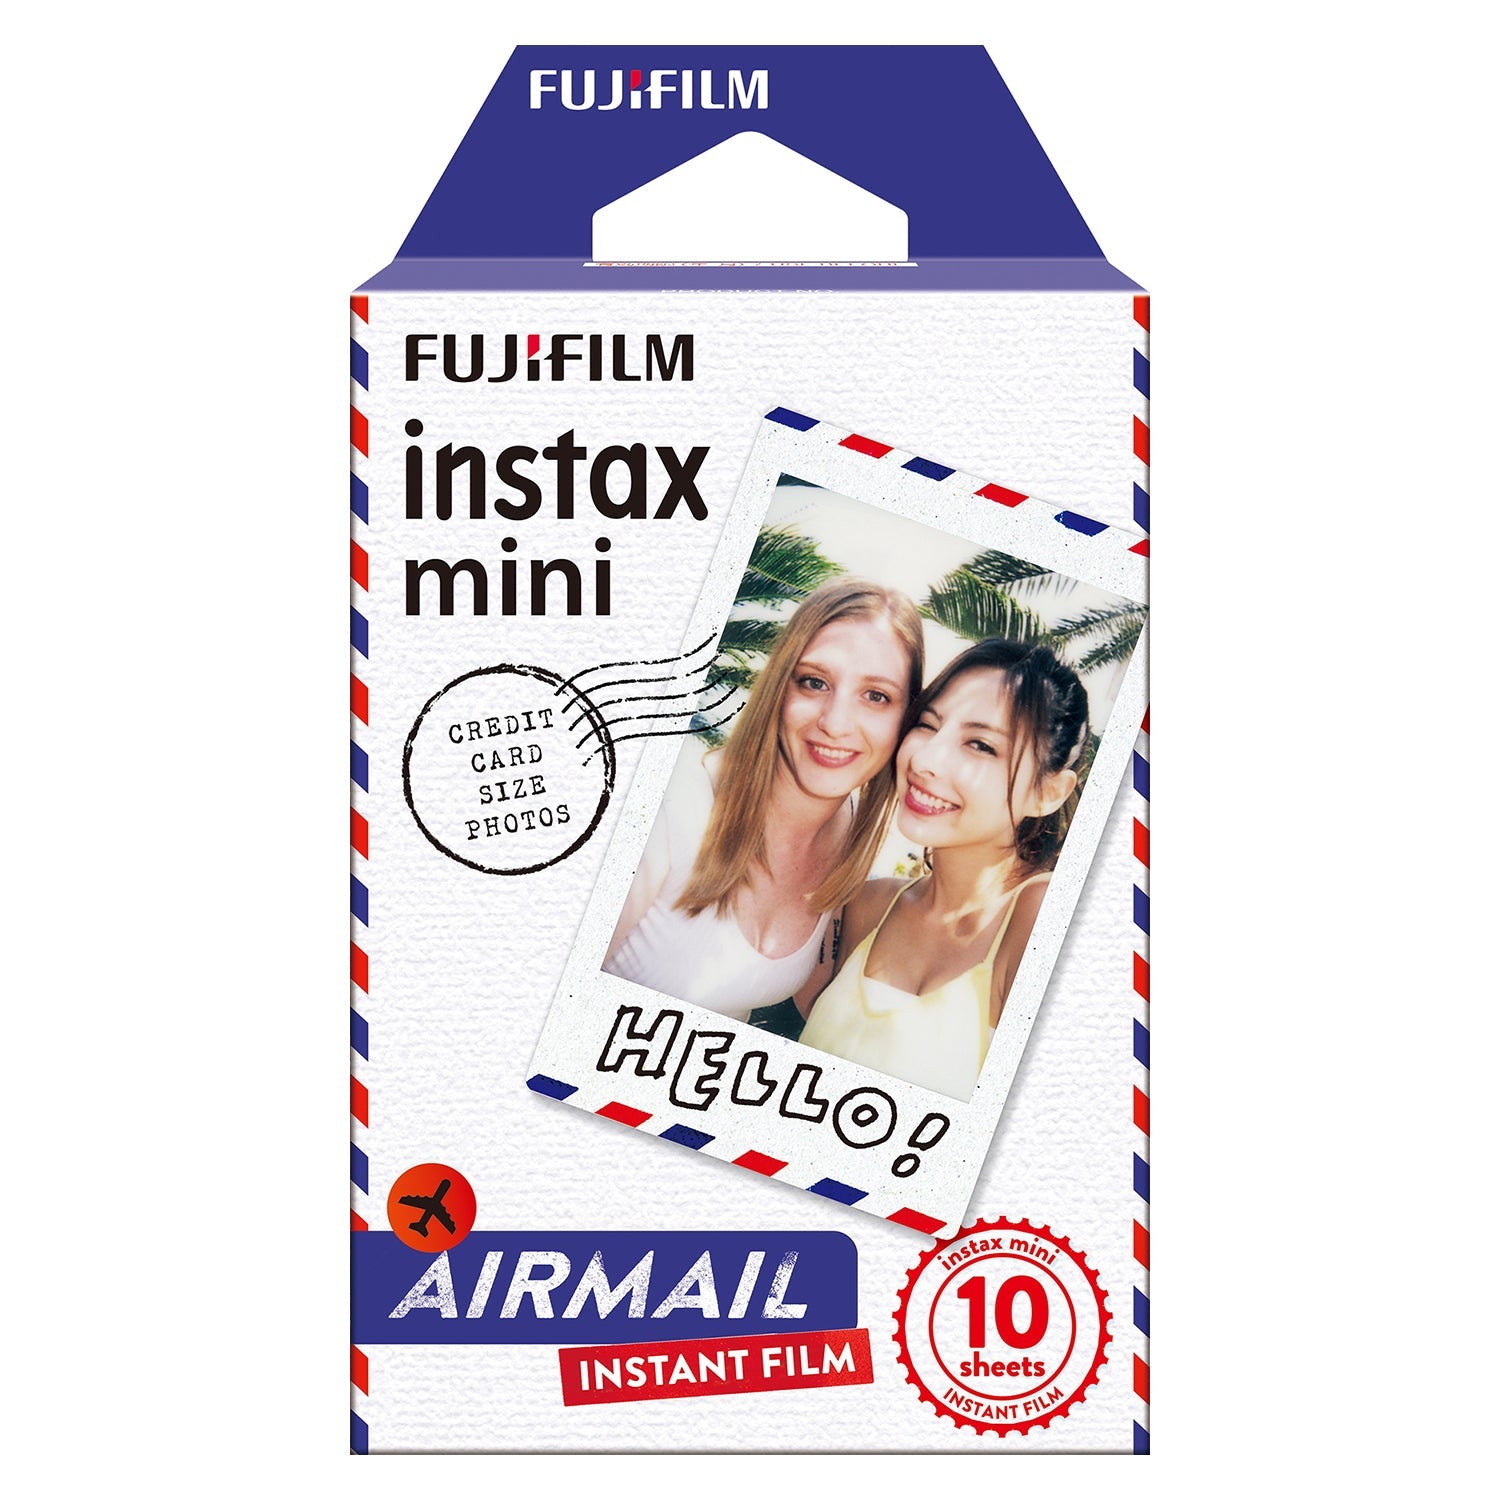 Fujifilm Instax Mini 10X1 airmail Instant Film with Instax Time Photo Album 64 Sheets (Violet Purple)